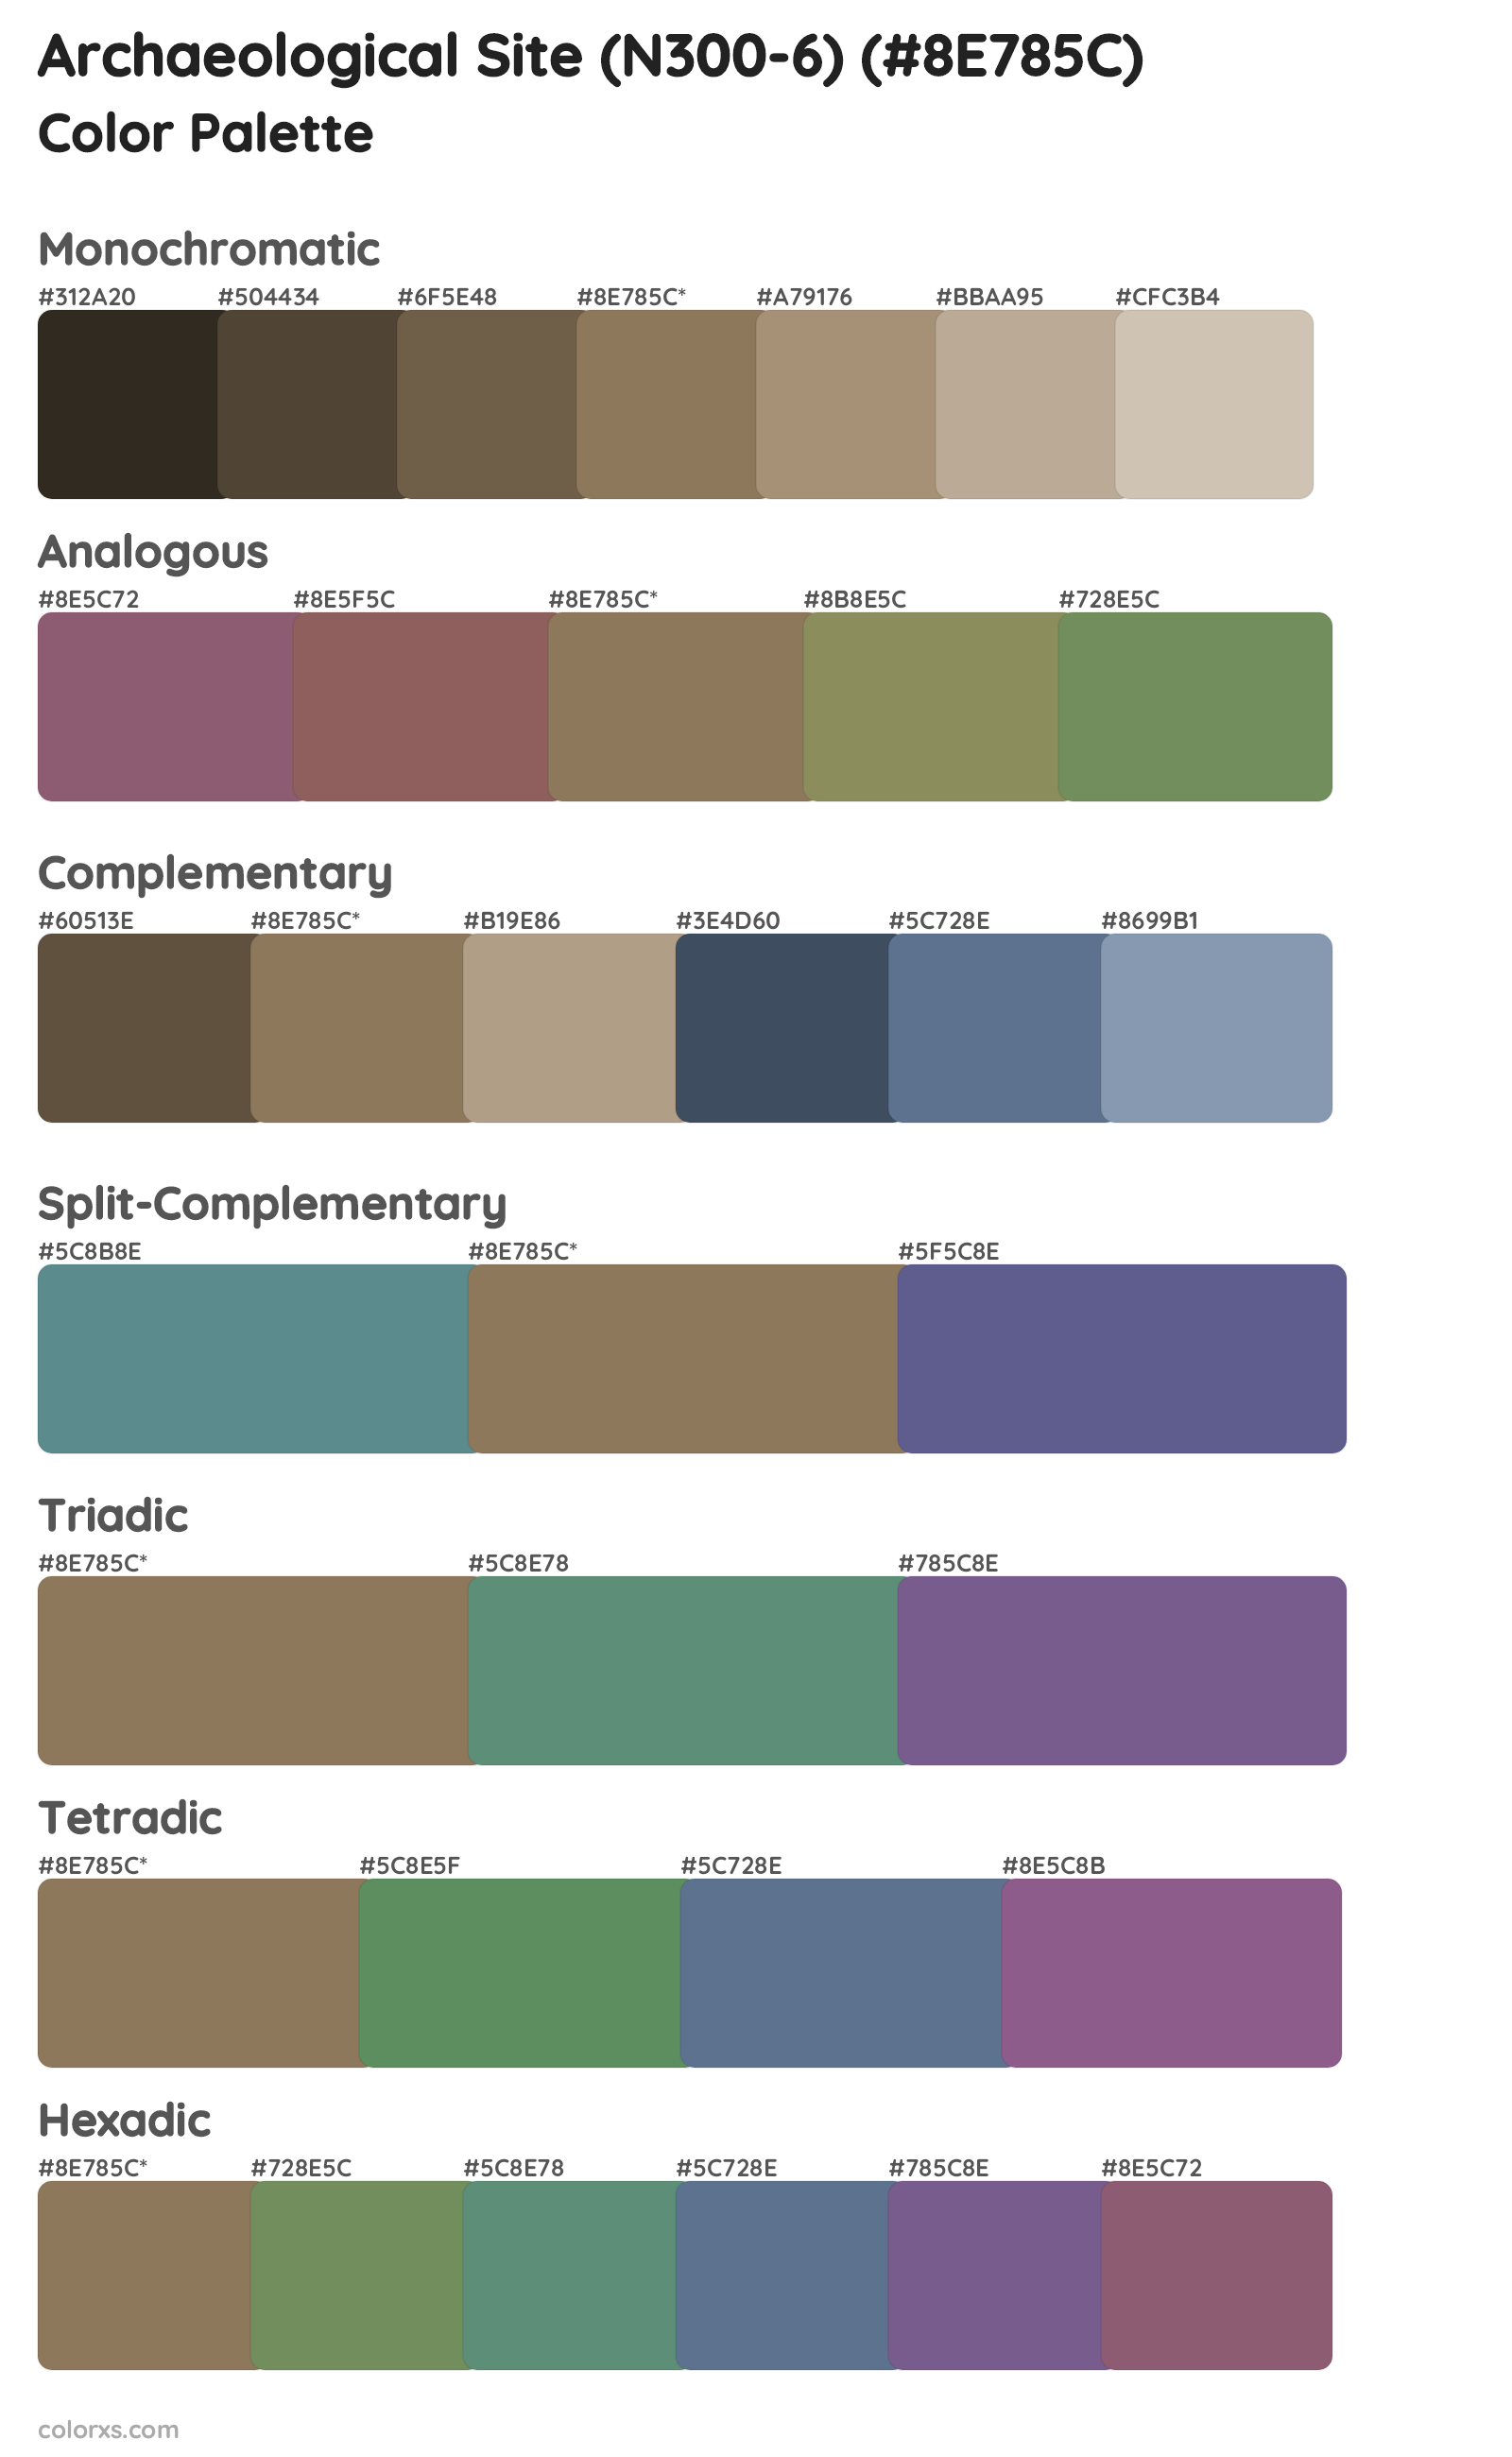 Archaeological Site (N300-6) Color Scheme Palettes